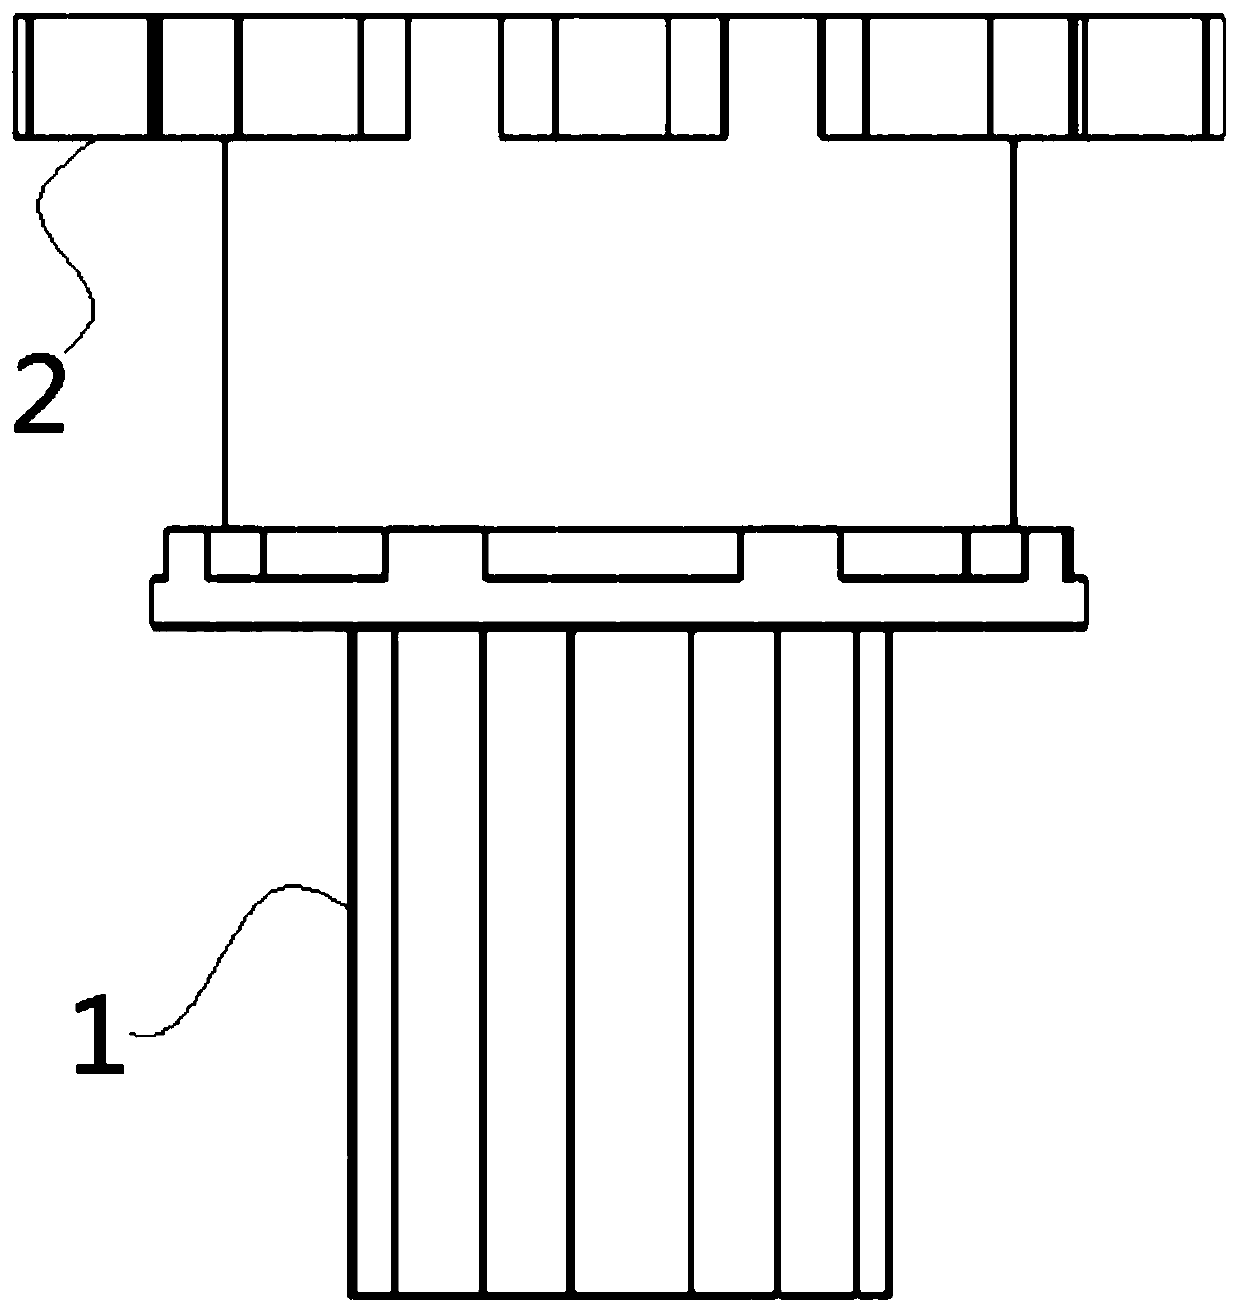 Sample rotating rack and Raman spectroscopy detector